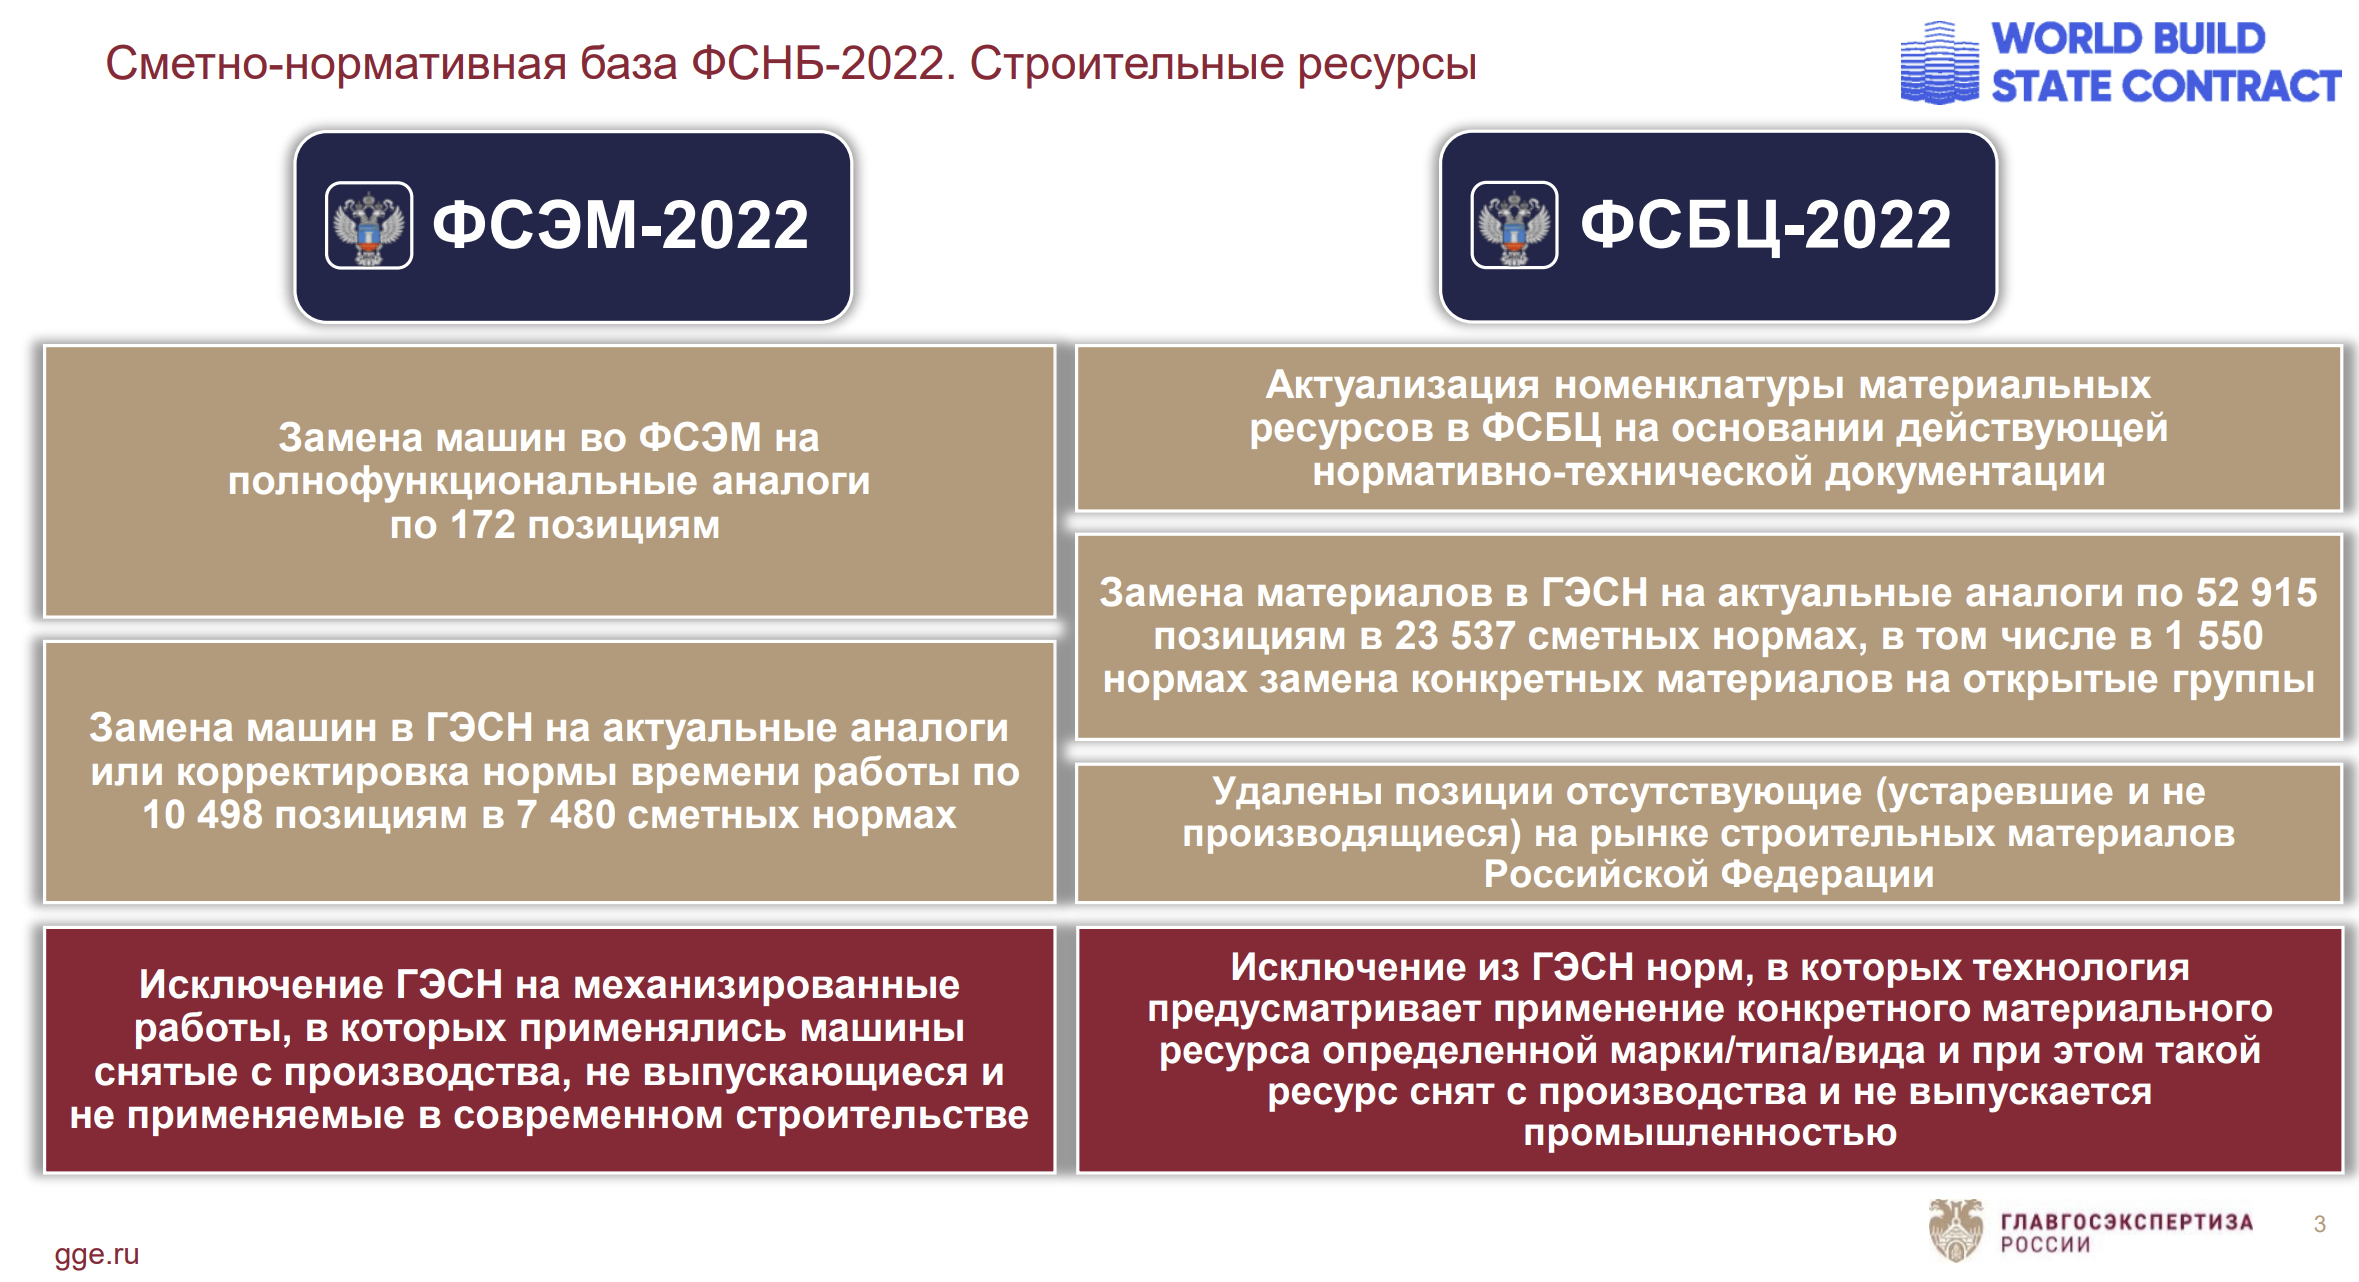 База 2022: ФСЭМ-2022, ФСБЦ-2022